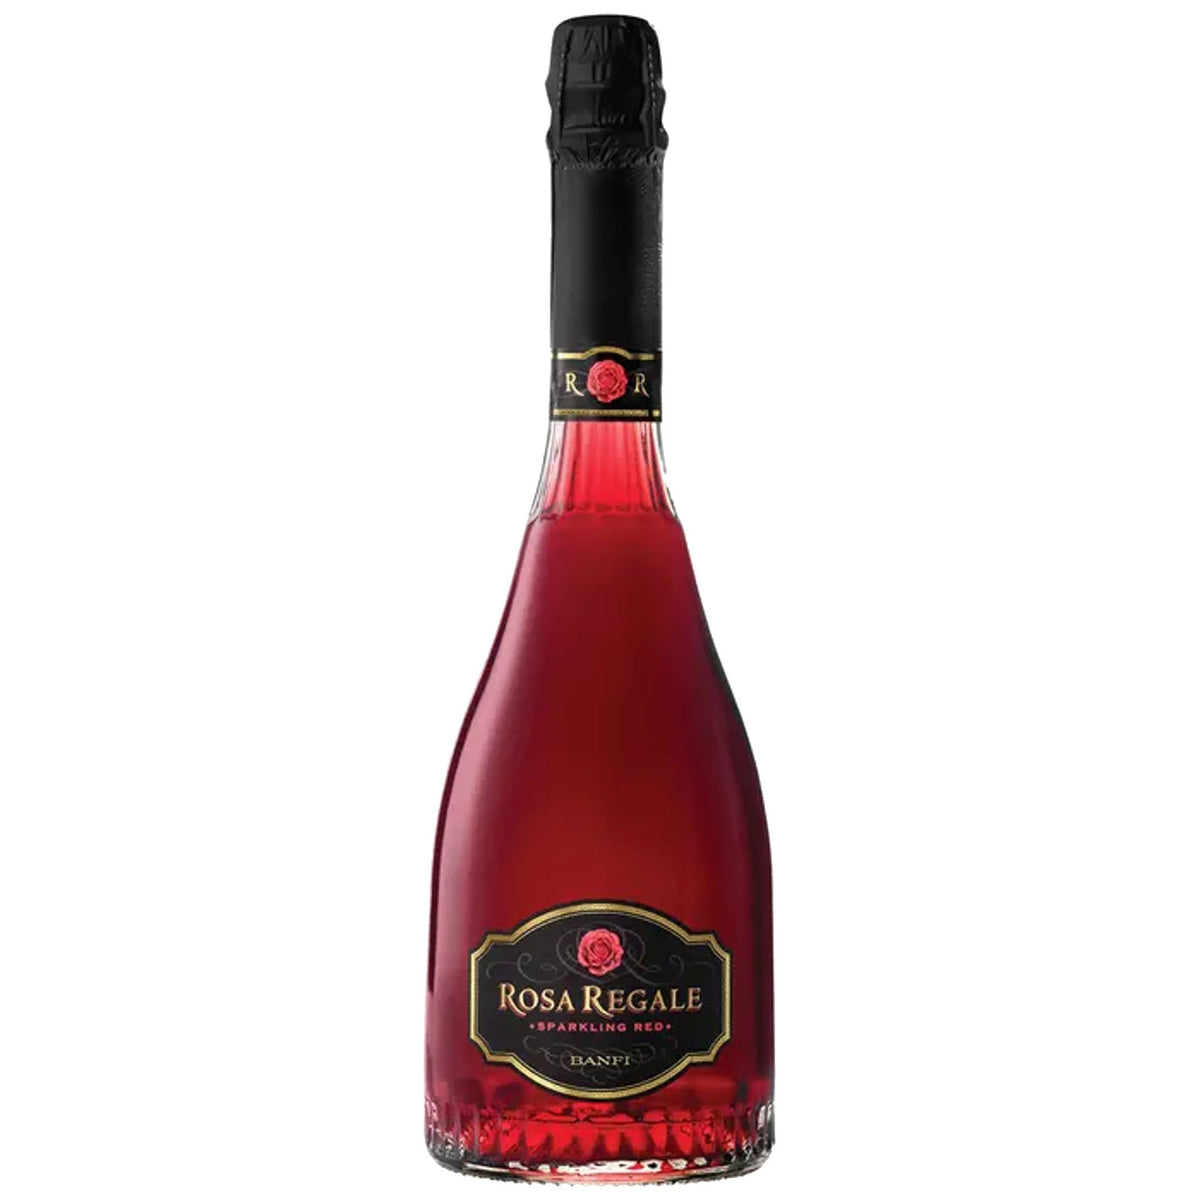 Rosa Regale Banfi Sparkling Red (750ml)